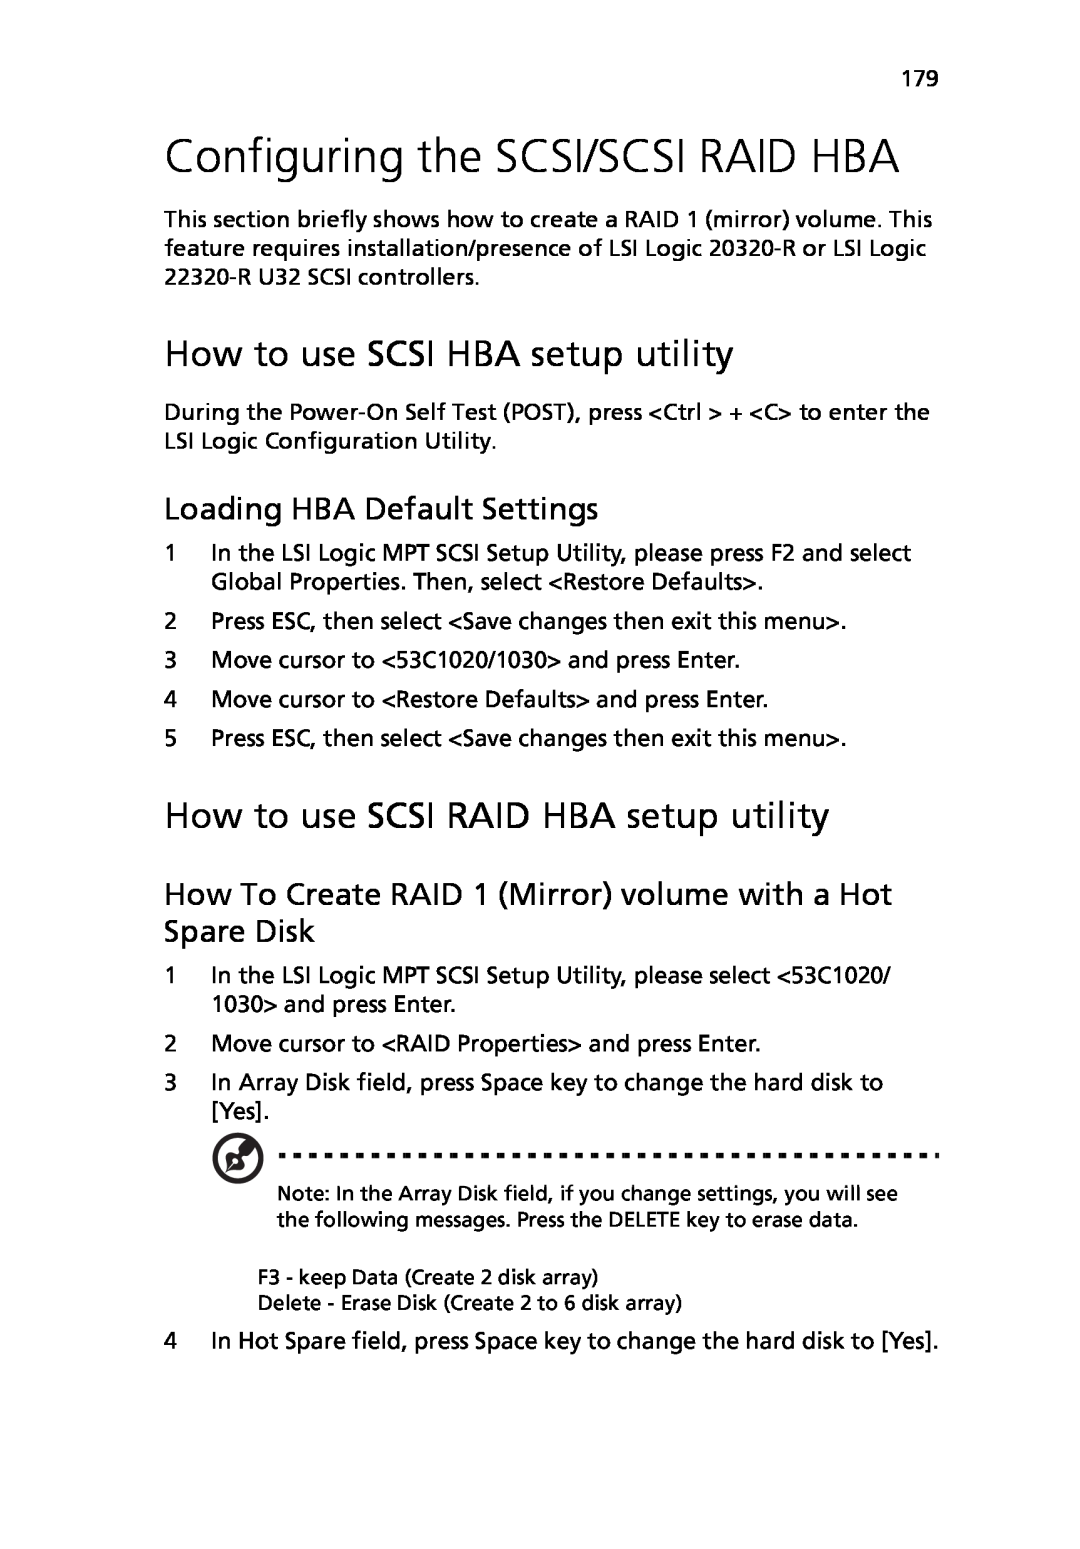 Acer Altos R710 manual Configuring the SCSI/SCSI RAID HBA, How to use SCSI HBA setup utility, Loading HBA Default Settings 